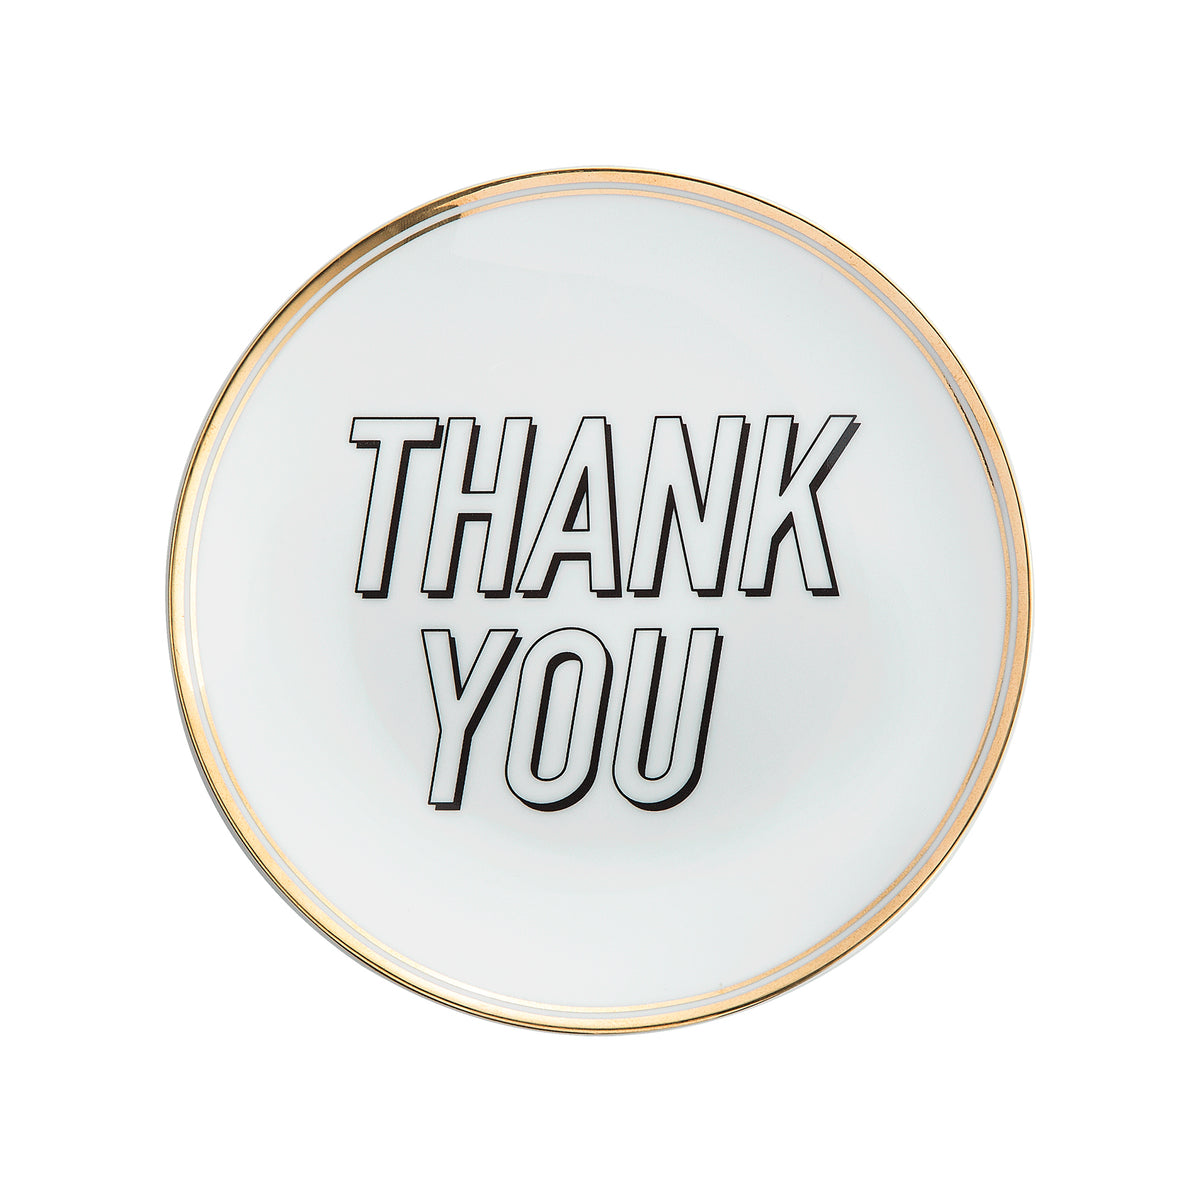 "Thank You" Porcelain Plate. 17 cm